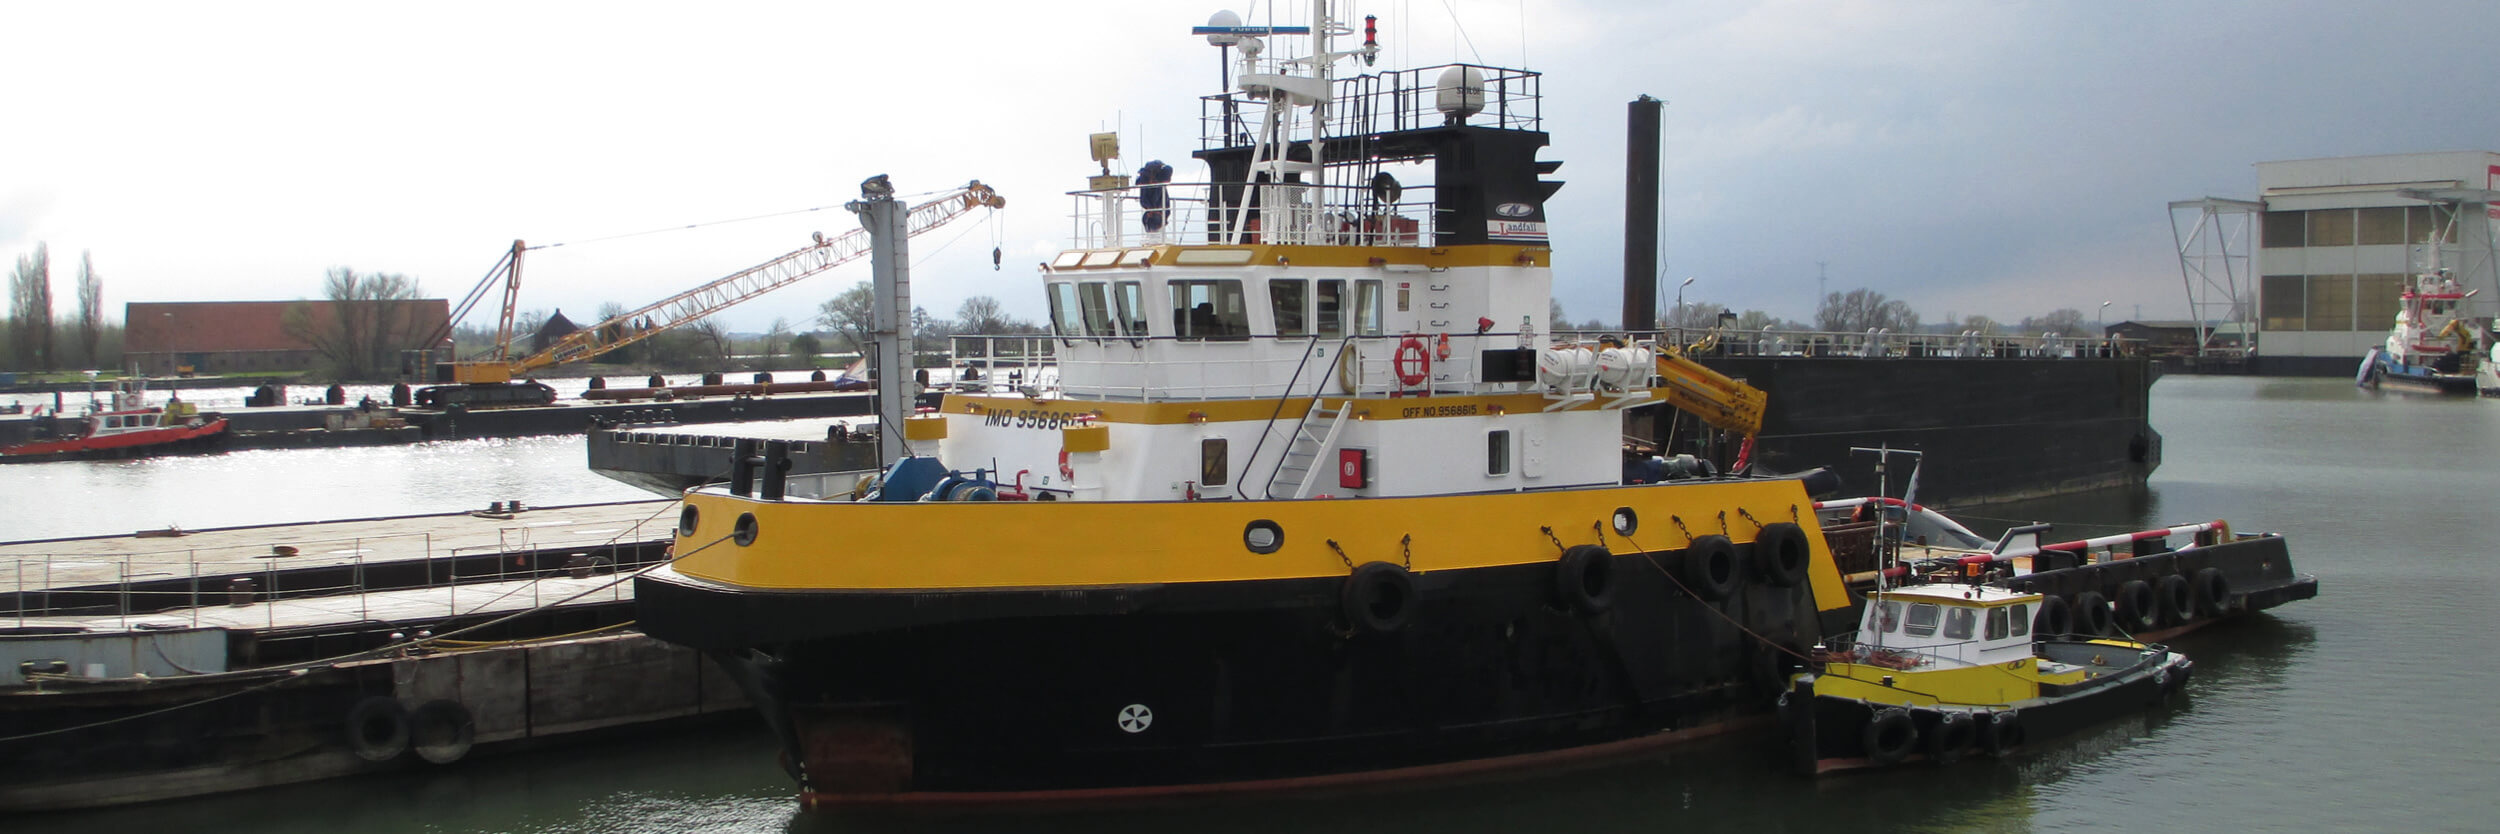 Tugboat and workboat image